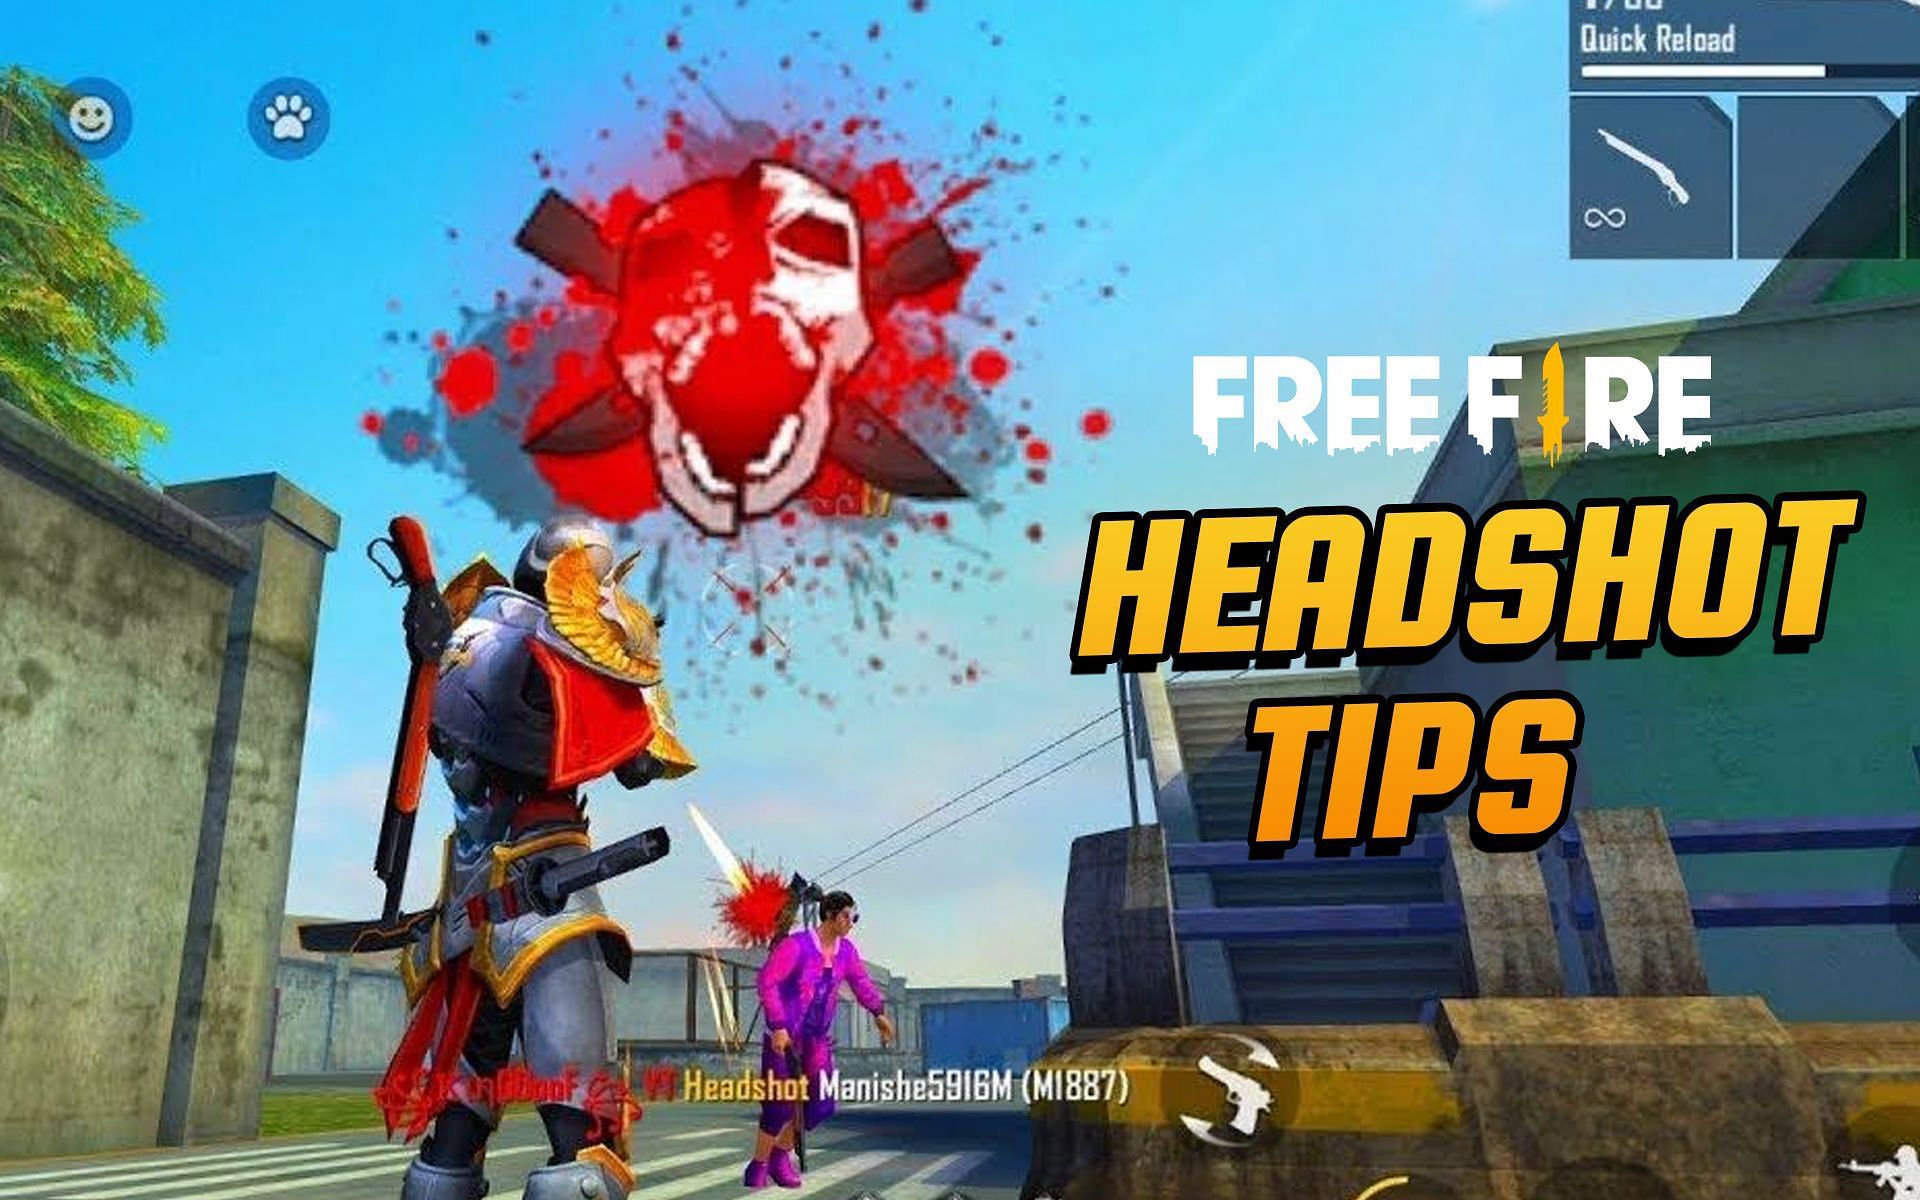 Headshots are sureshot one or two hit kills in games like Free Fire (Image via Sportskeeda)